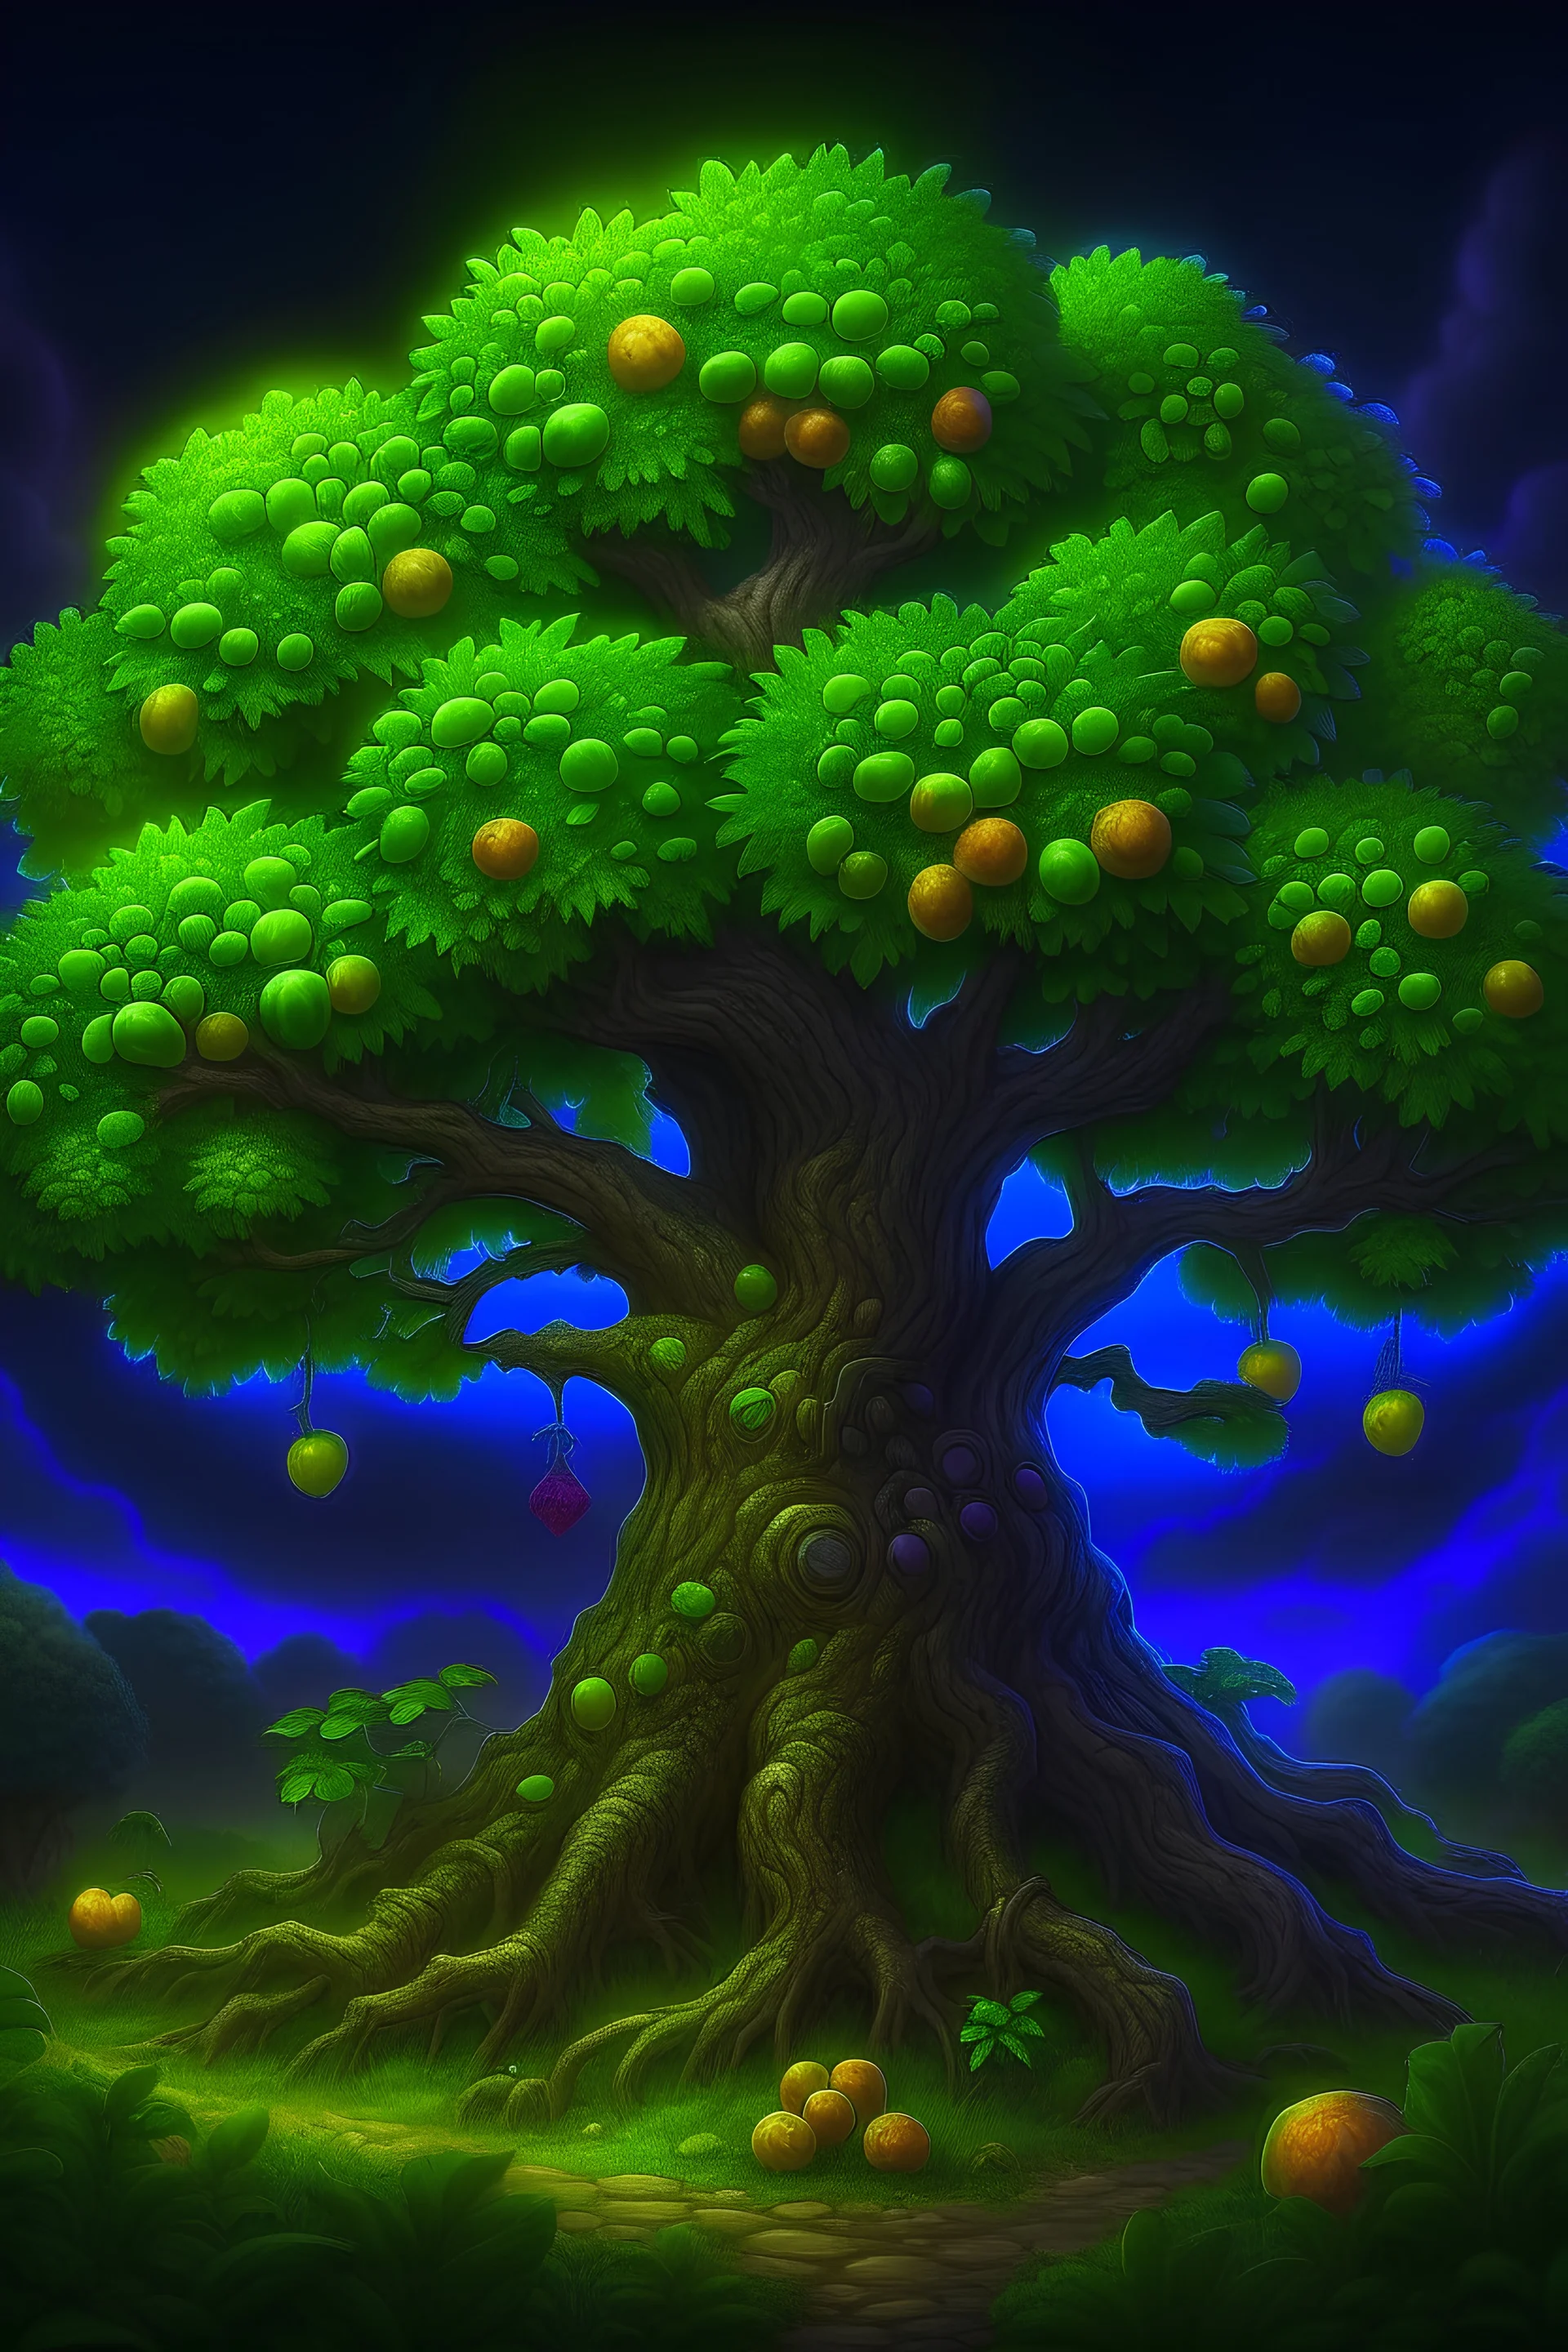 Hearthstone art, druid farmer growing fruit trees containing an ydillic scenery dark background